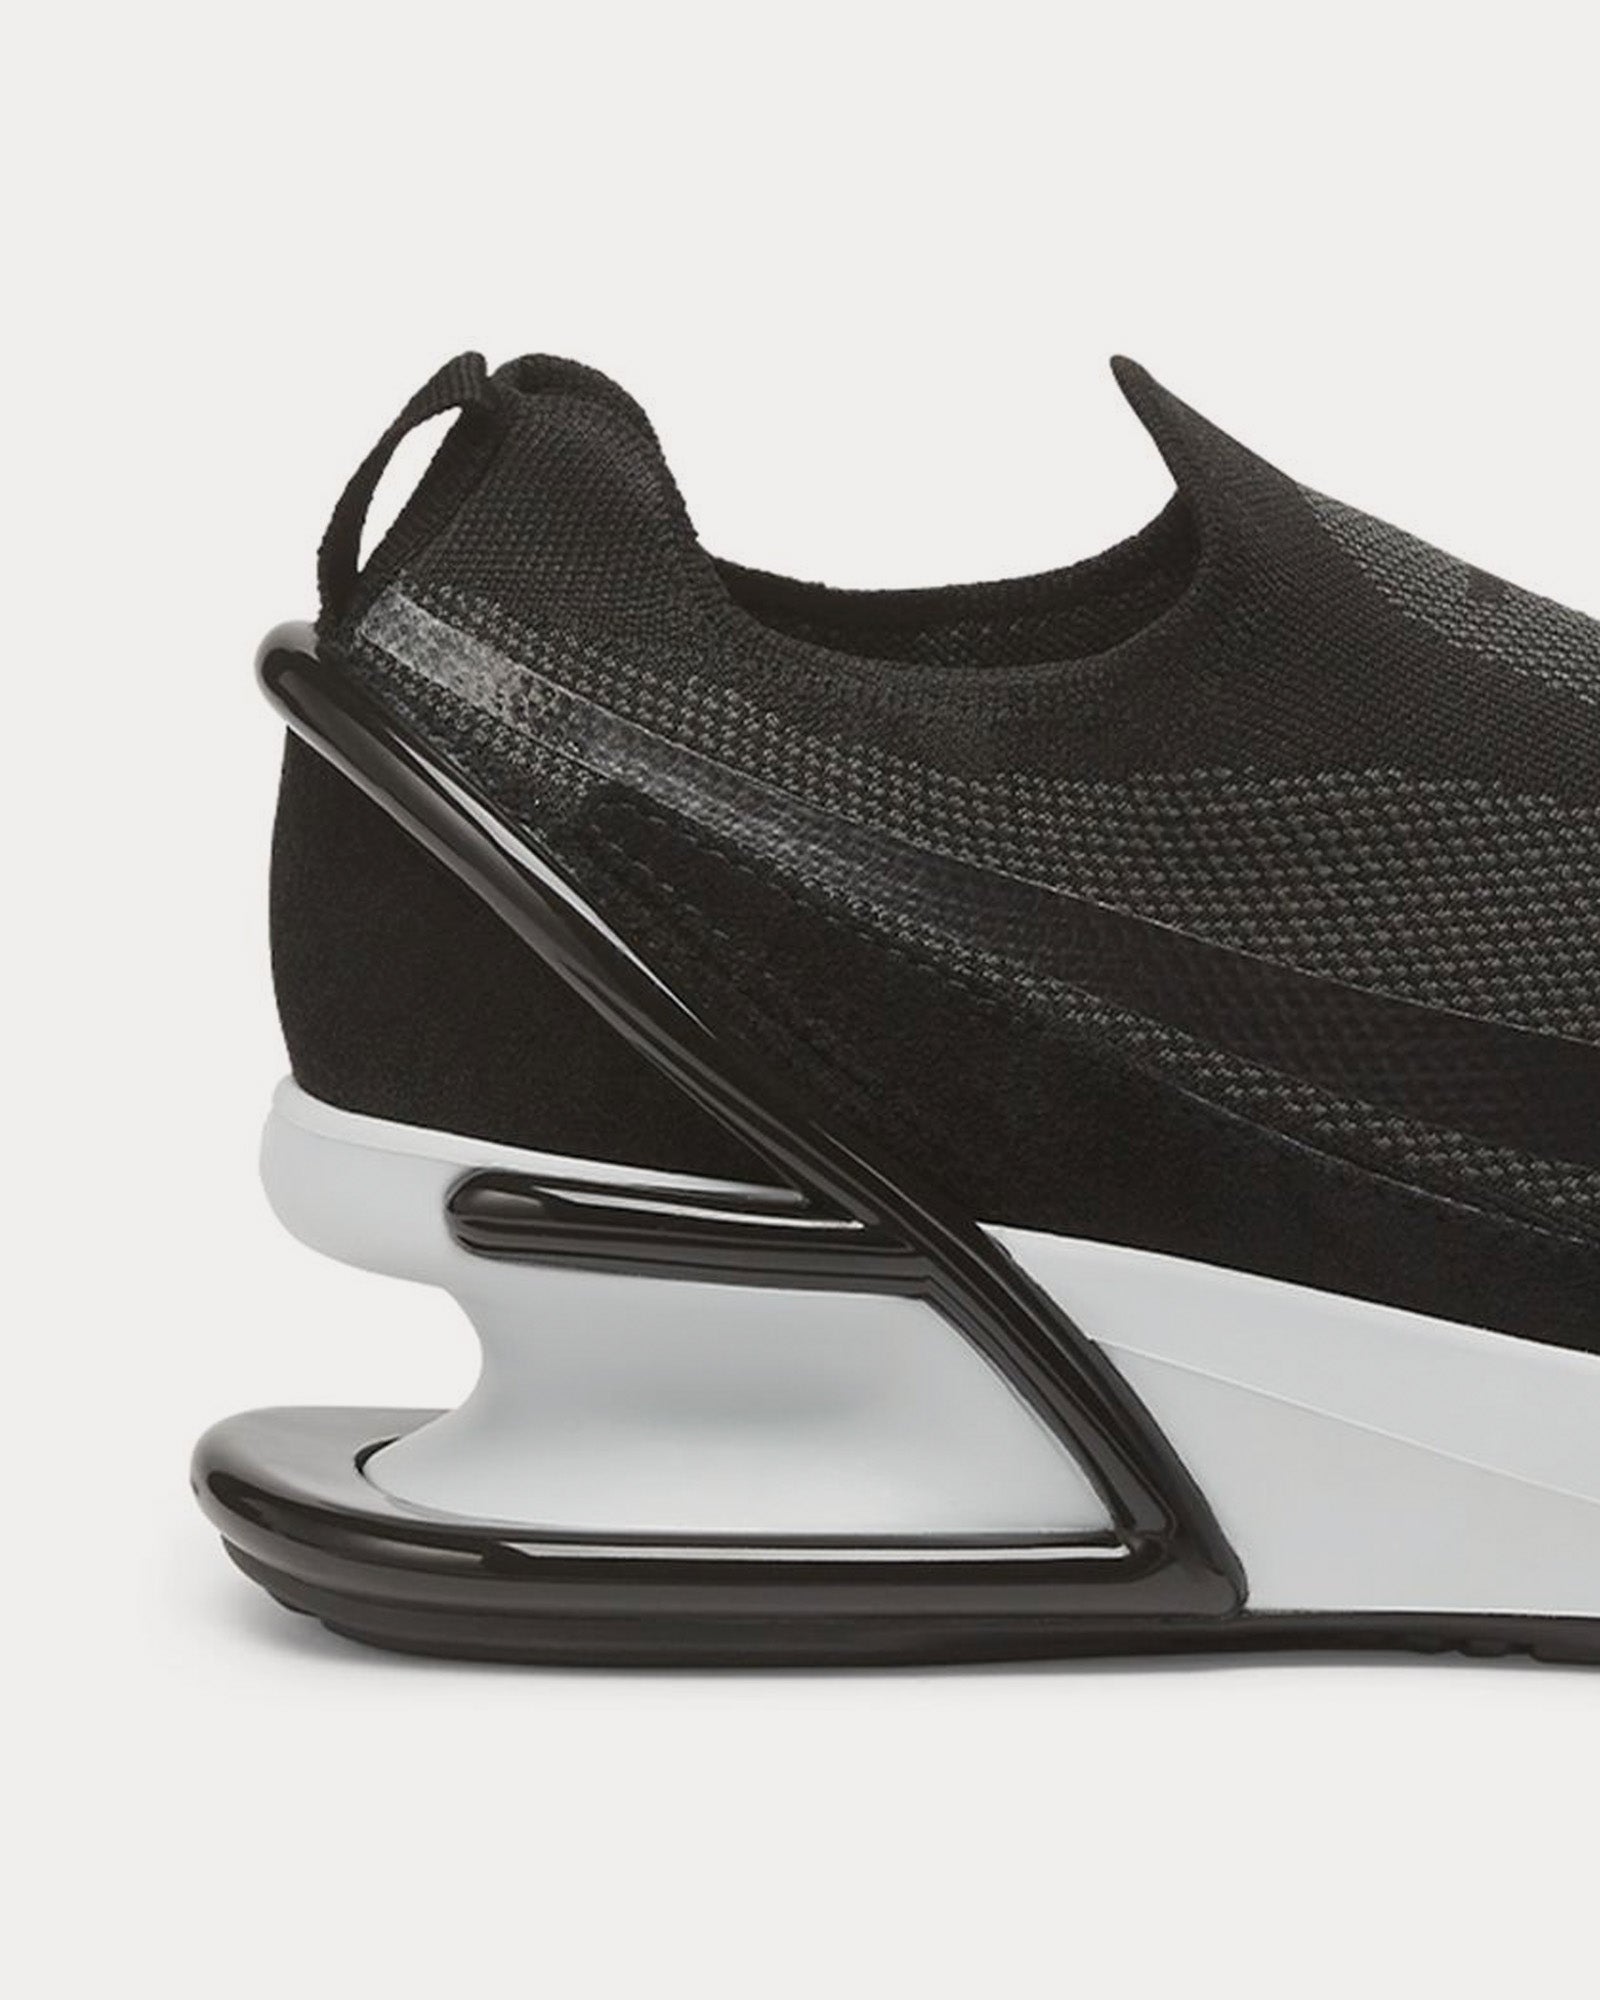 Fendi - First 1 Fabric Black Slip On Sneakers